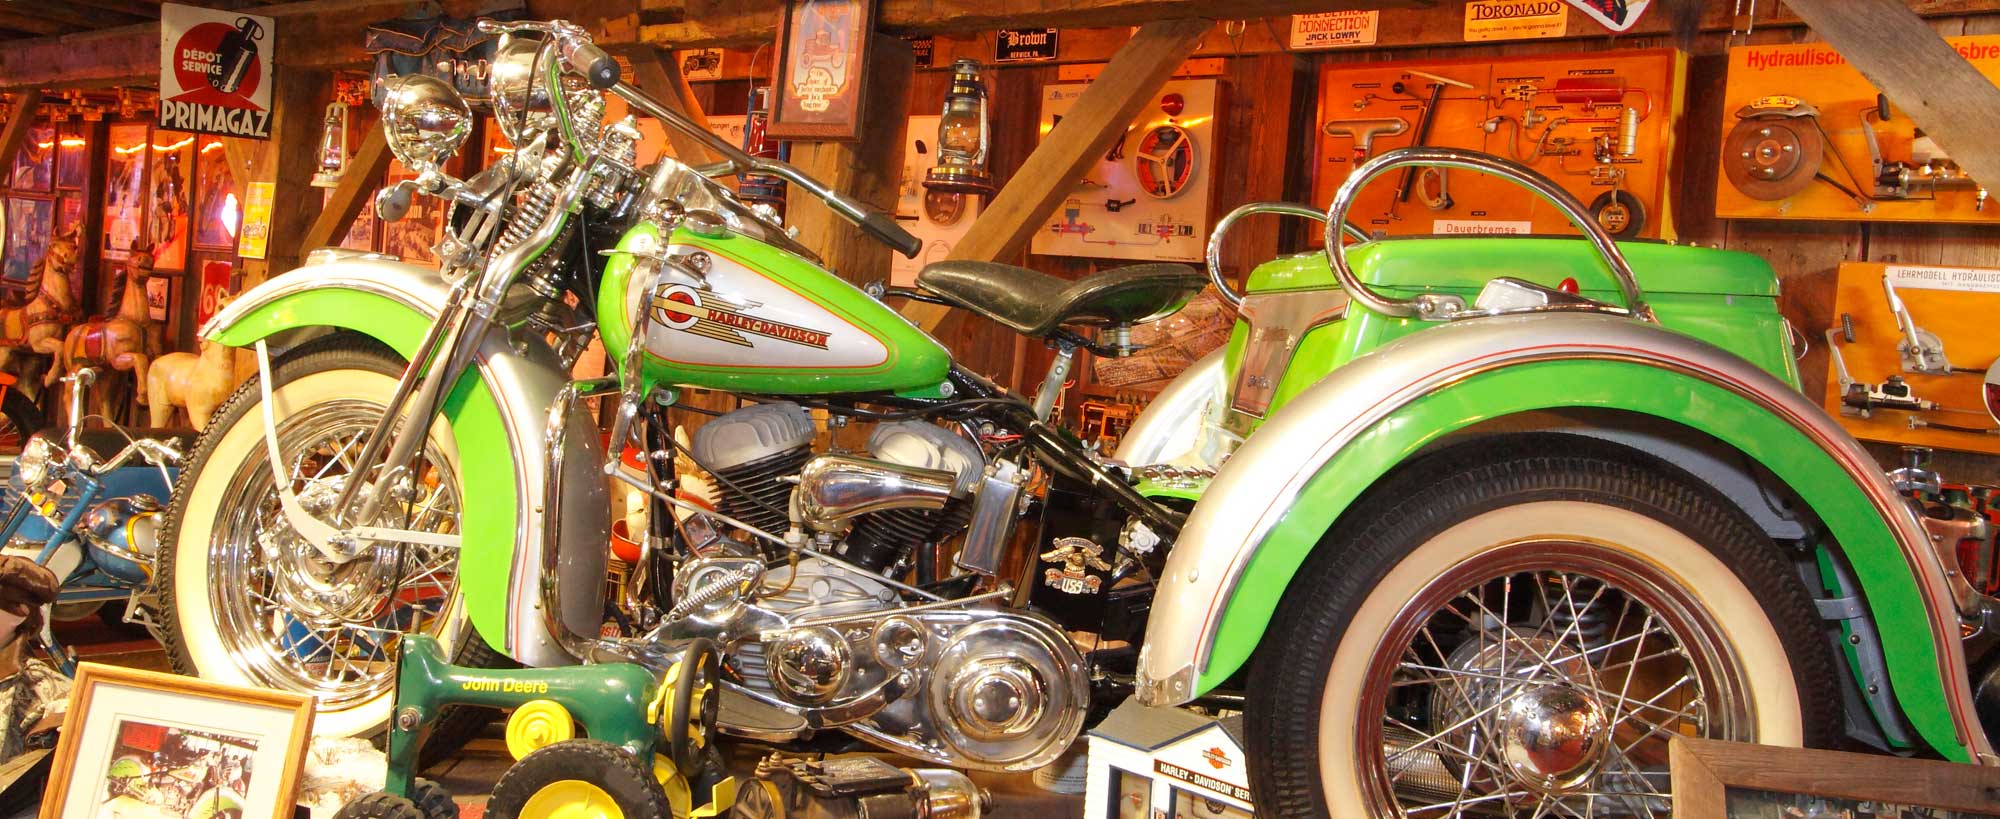 Vintage motorcycles galore inside Bill's Old Bike Barn